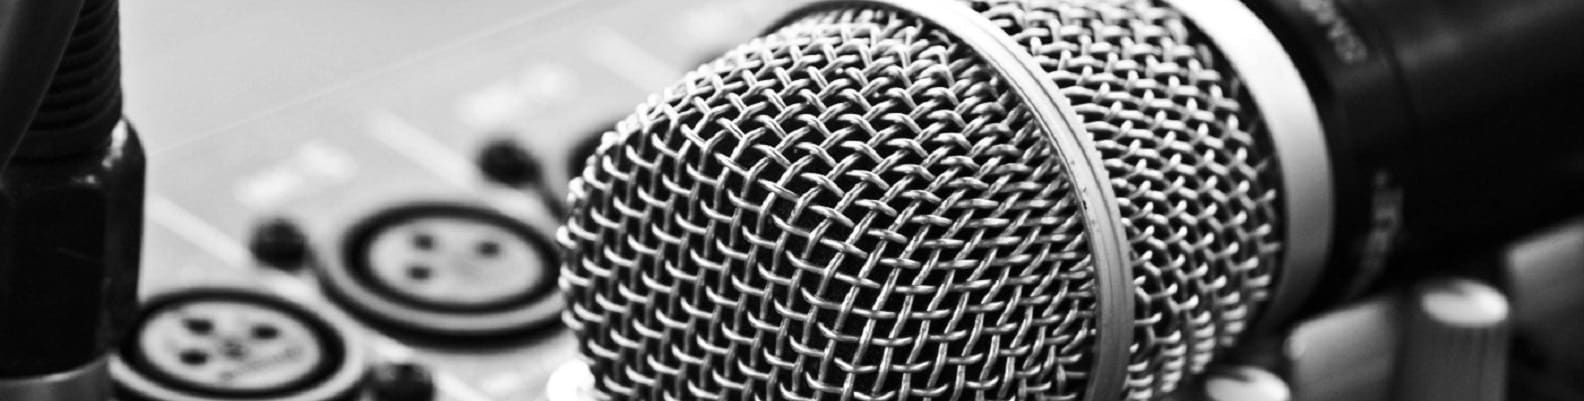 recording microphone linkedin background image